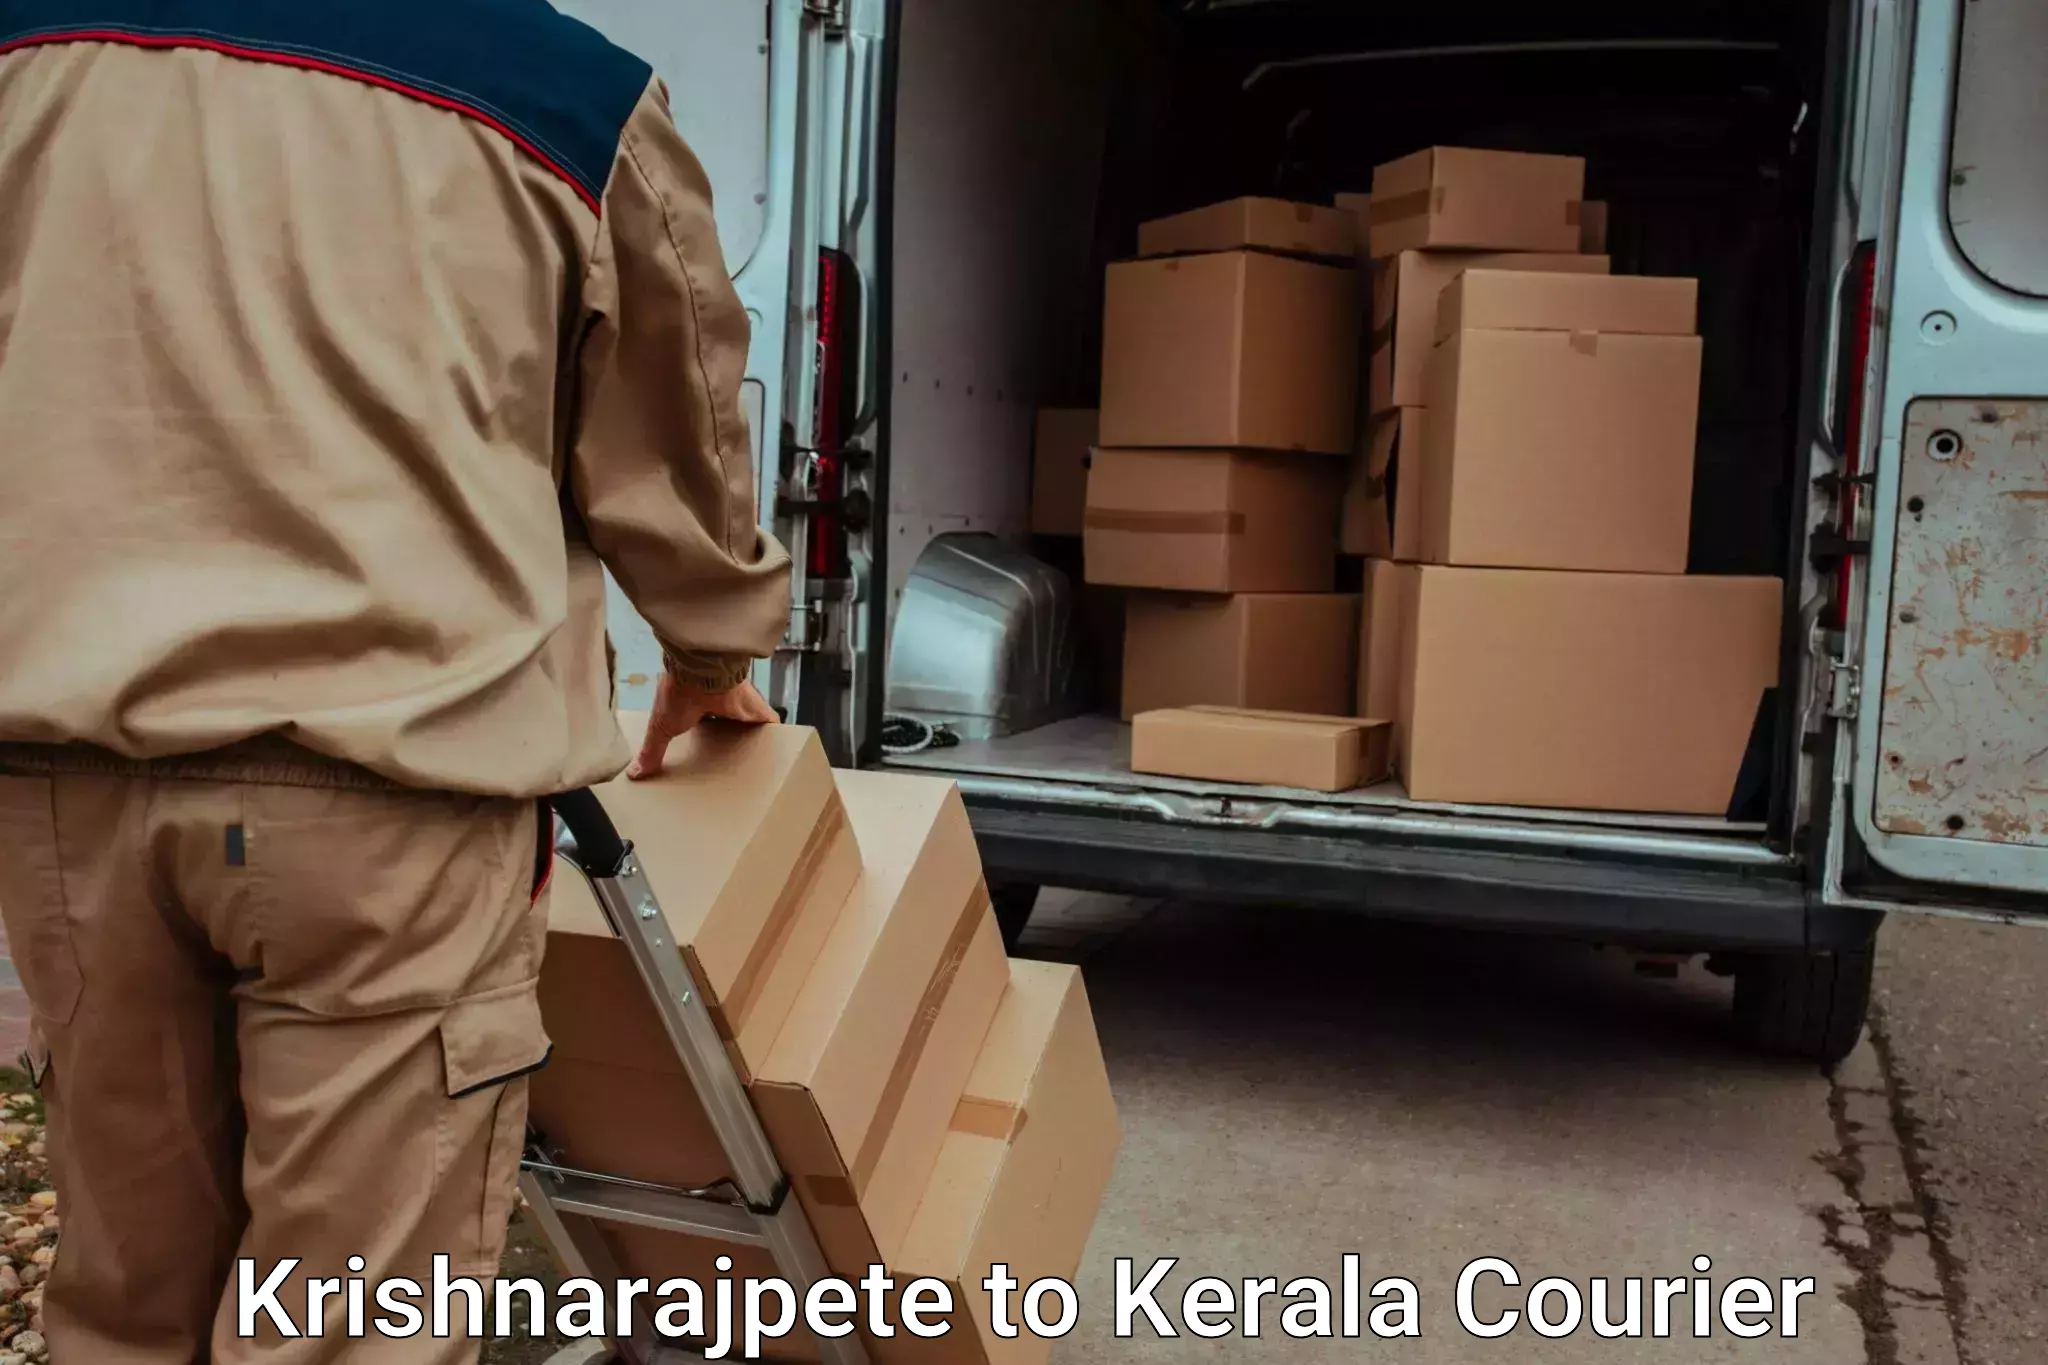 Home relocation experts Krishnarajpete to Kochi